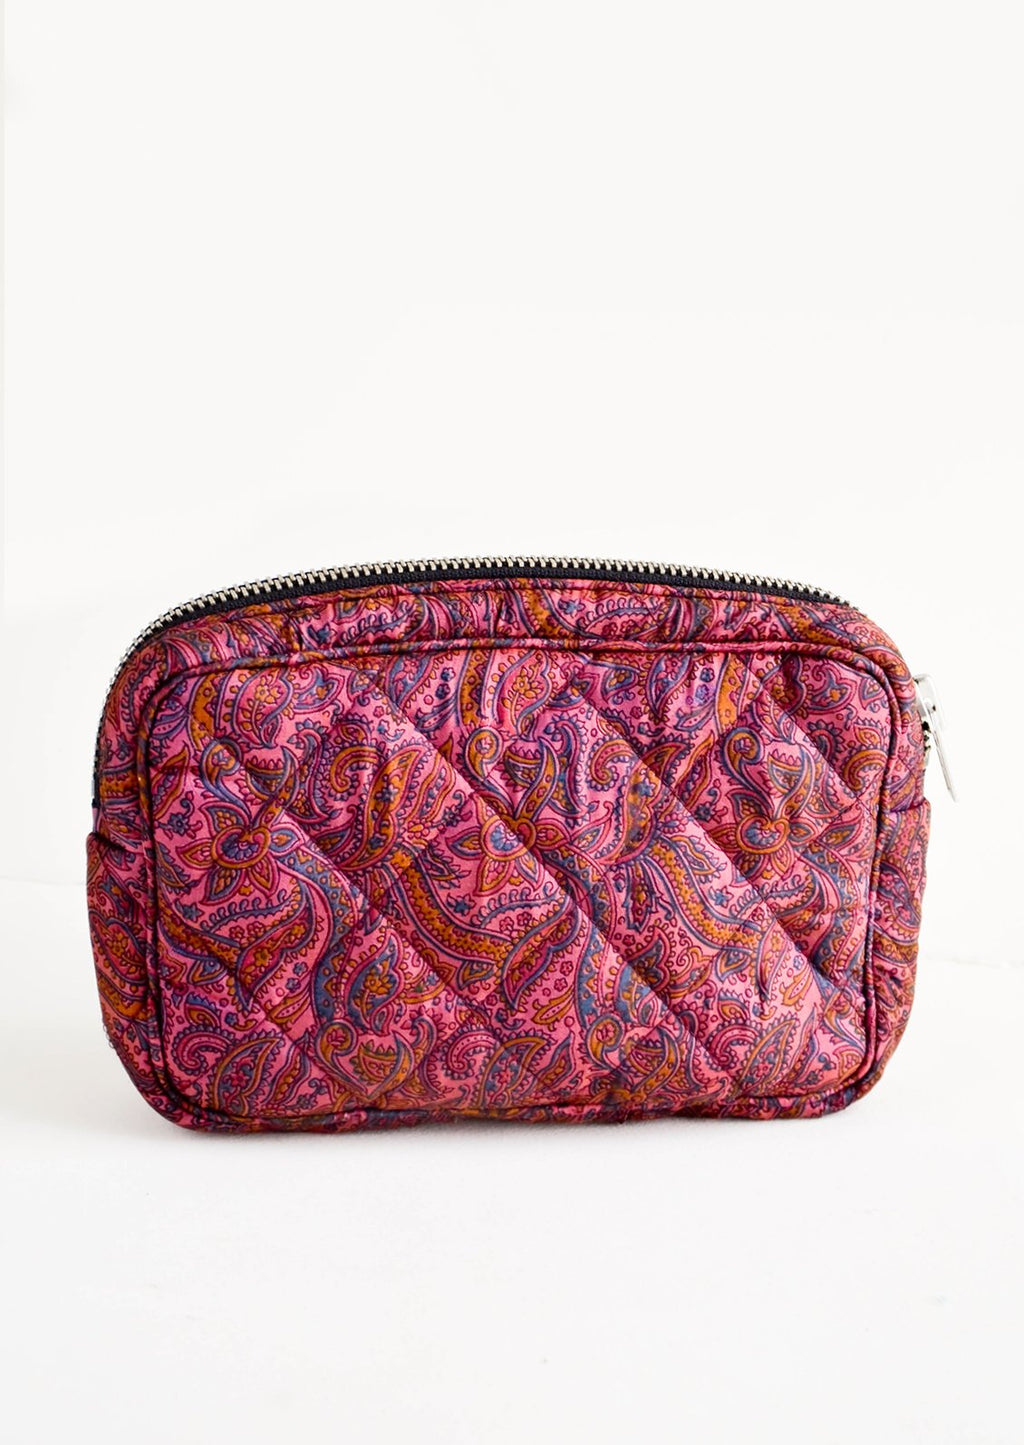 Small / Plum Floral Paisley: Flat and rectangular makeup travel bag with zip closure in plum paisley print